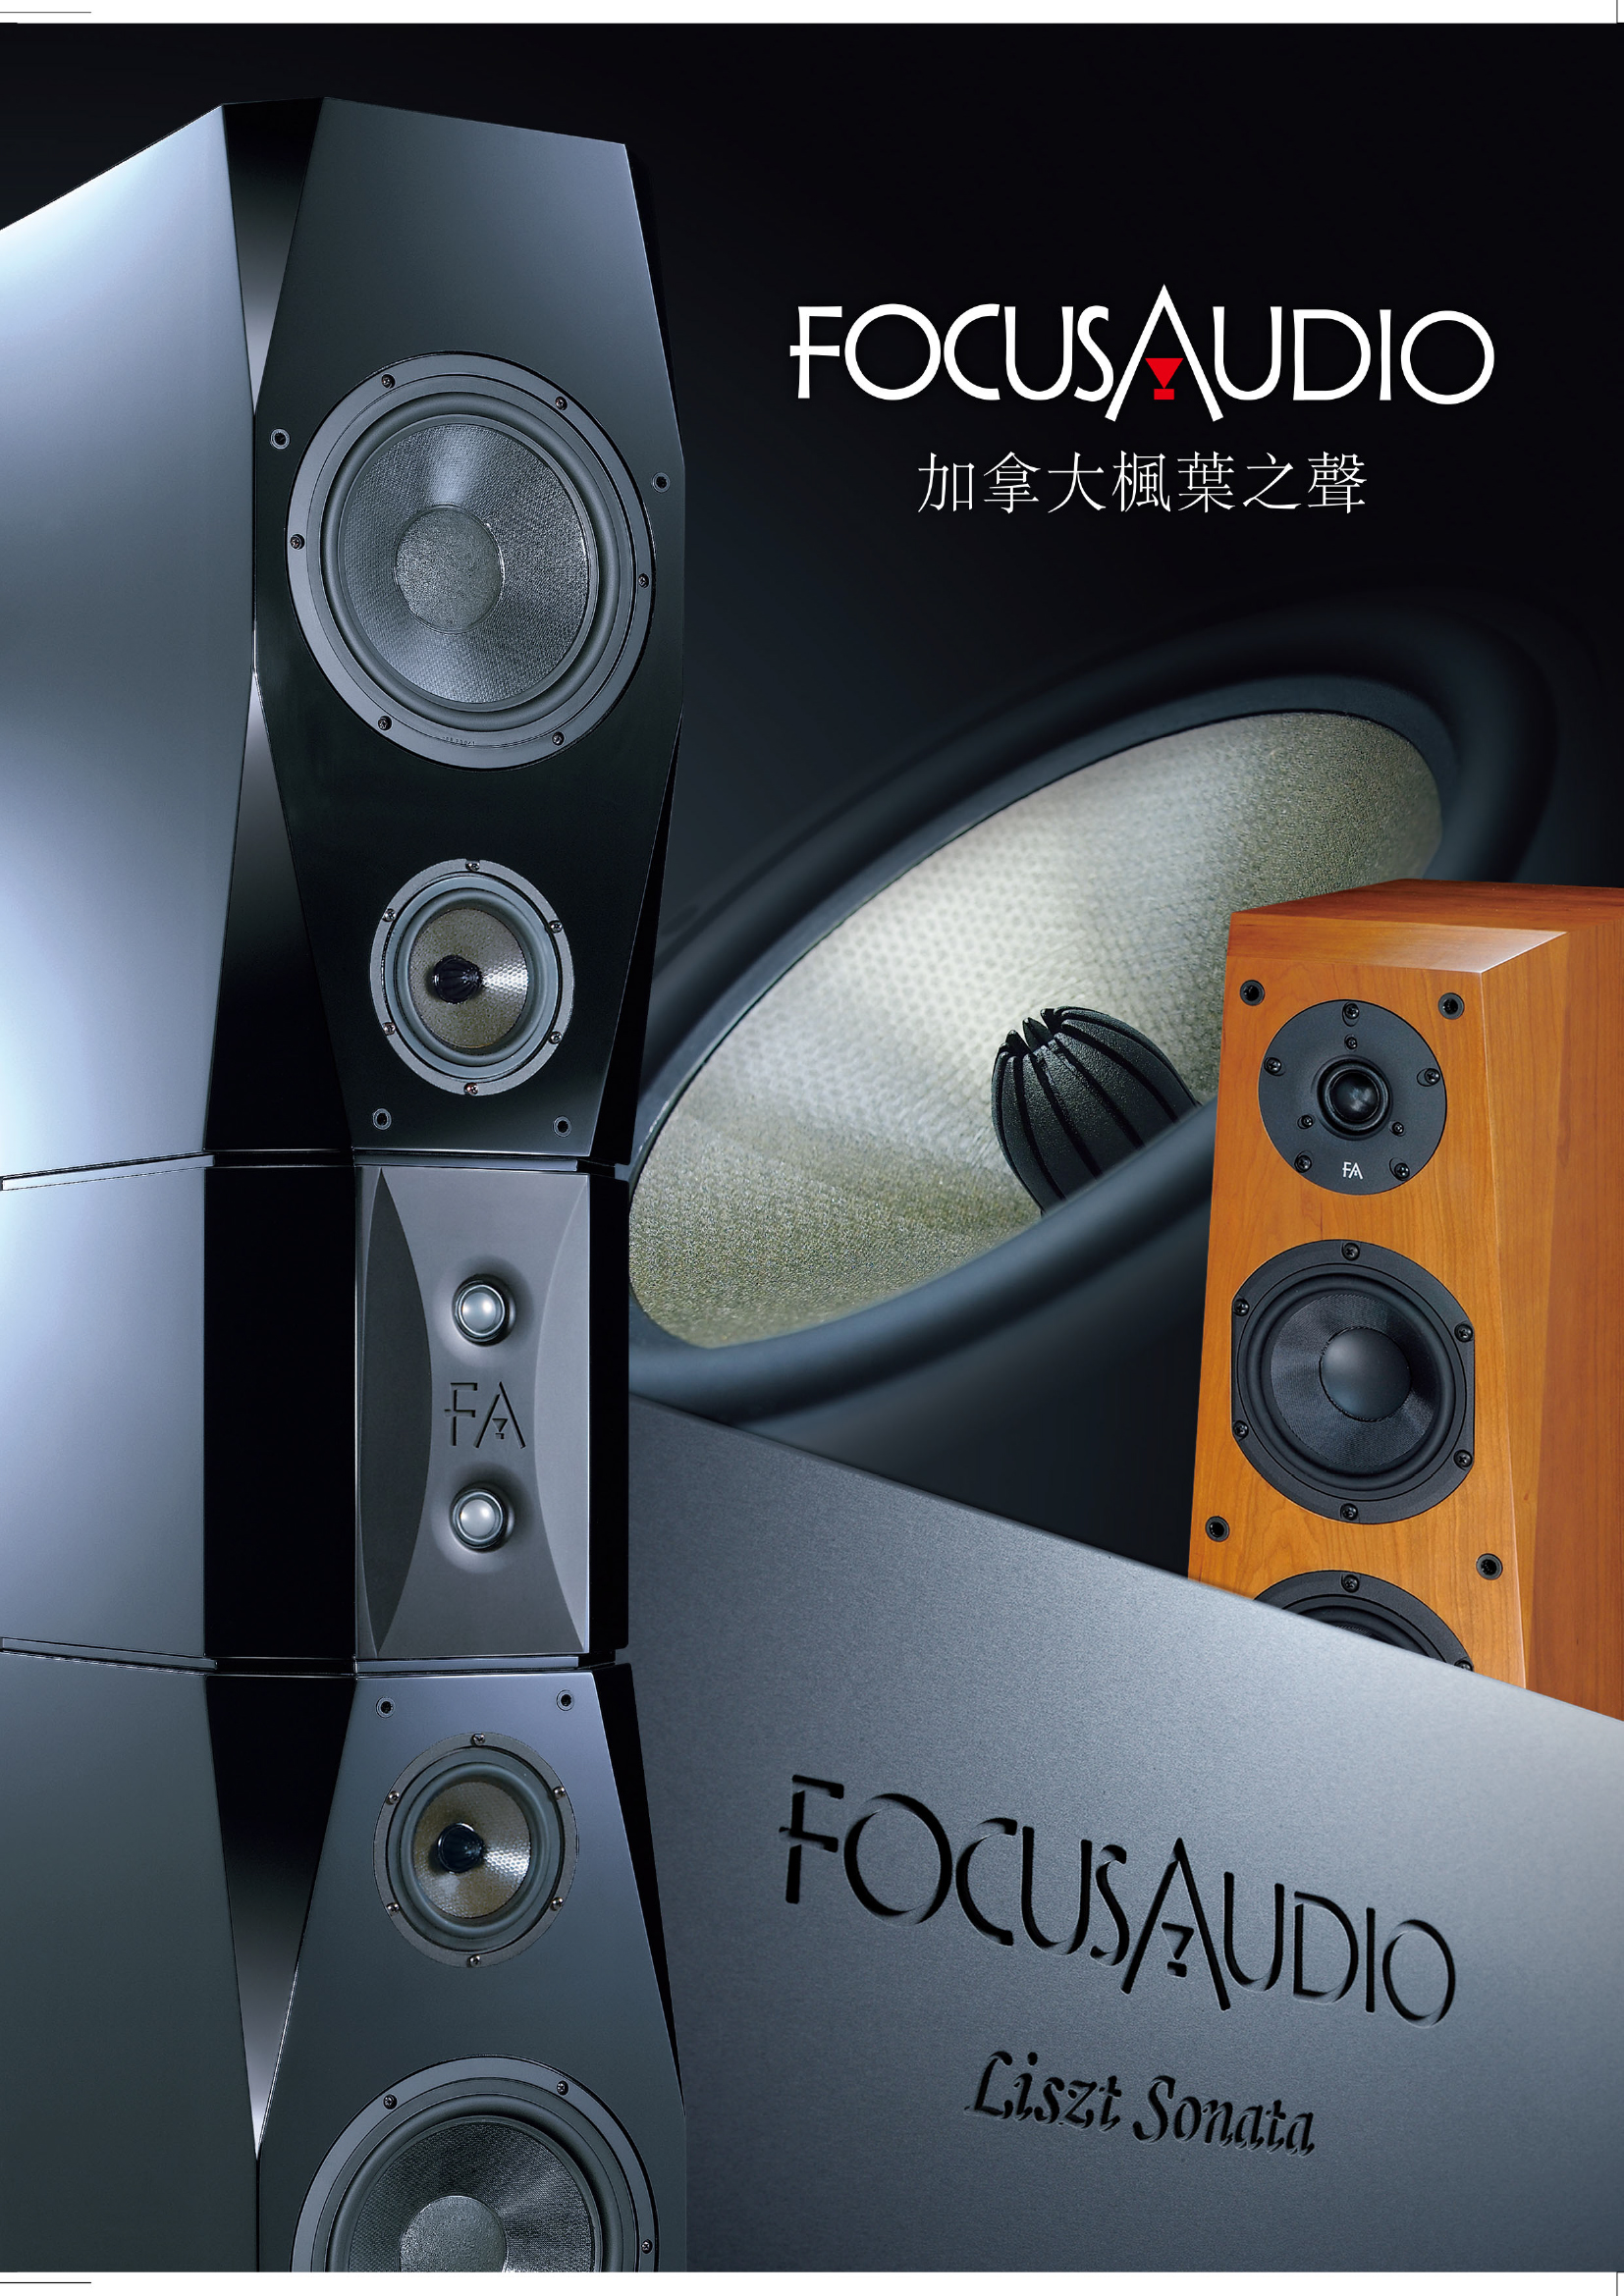 FocusAudio_201803_04a-1 copy